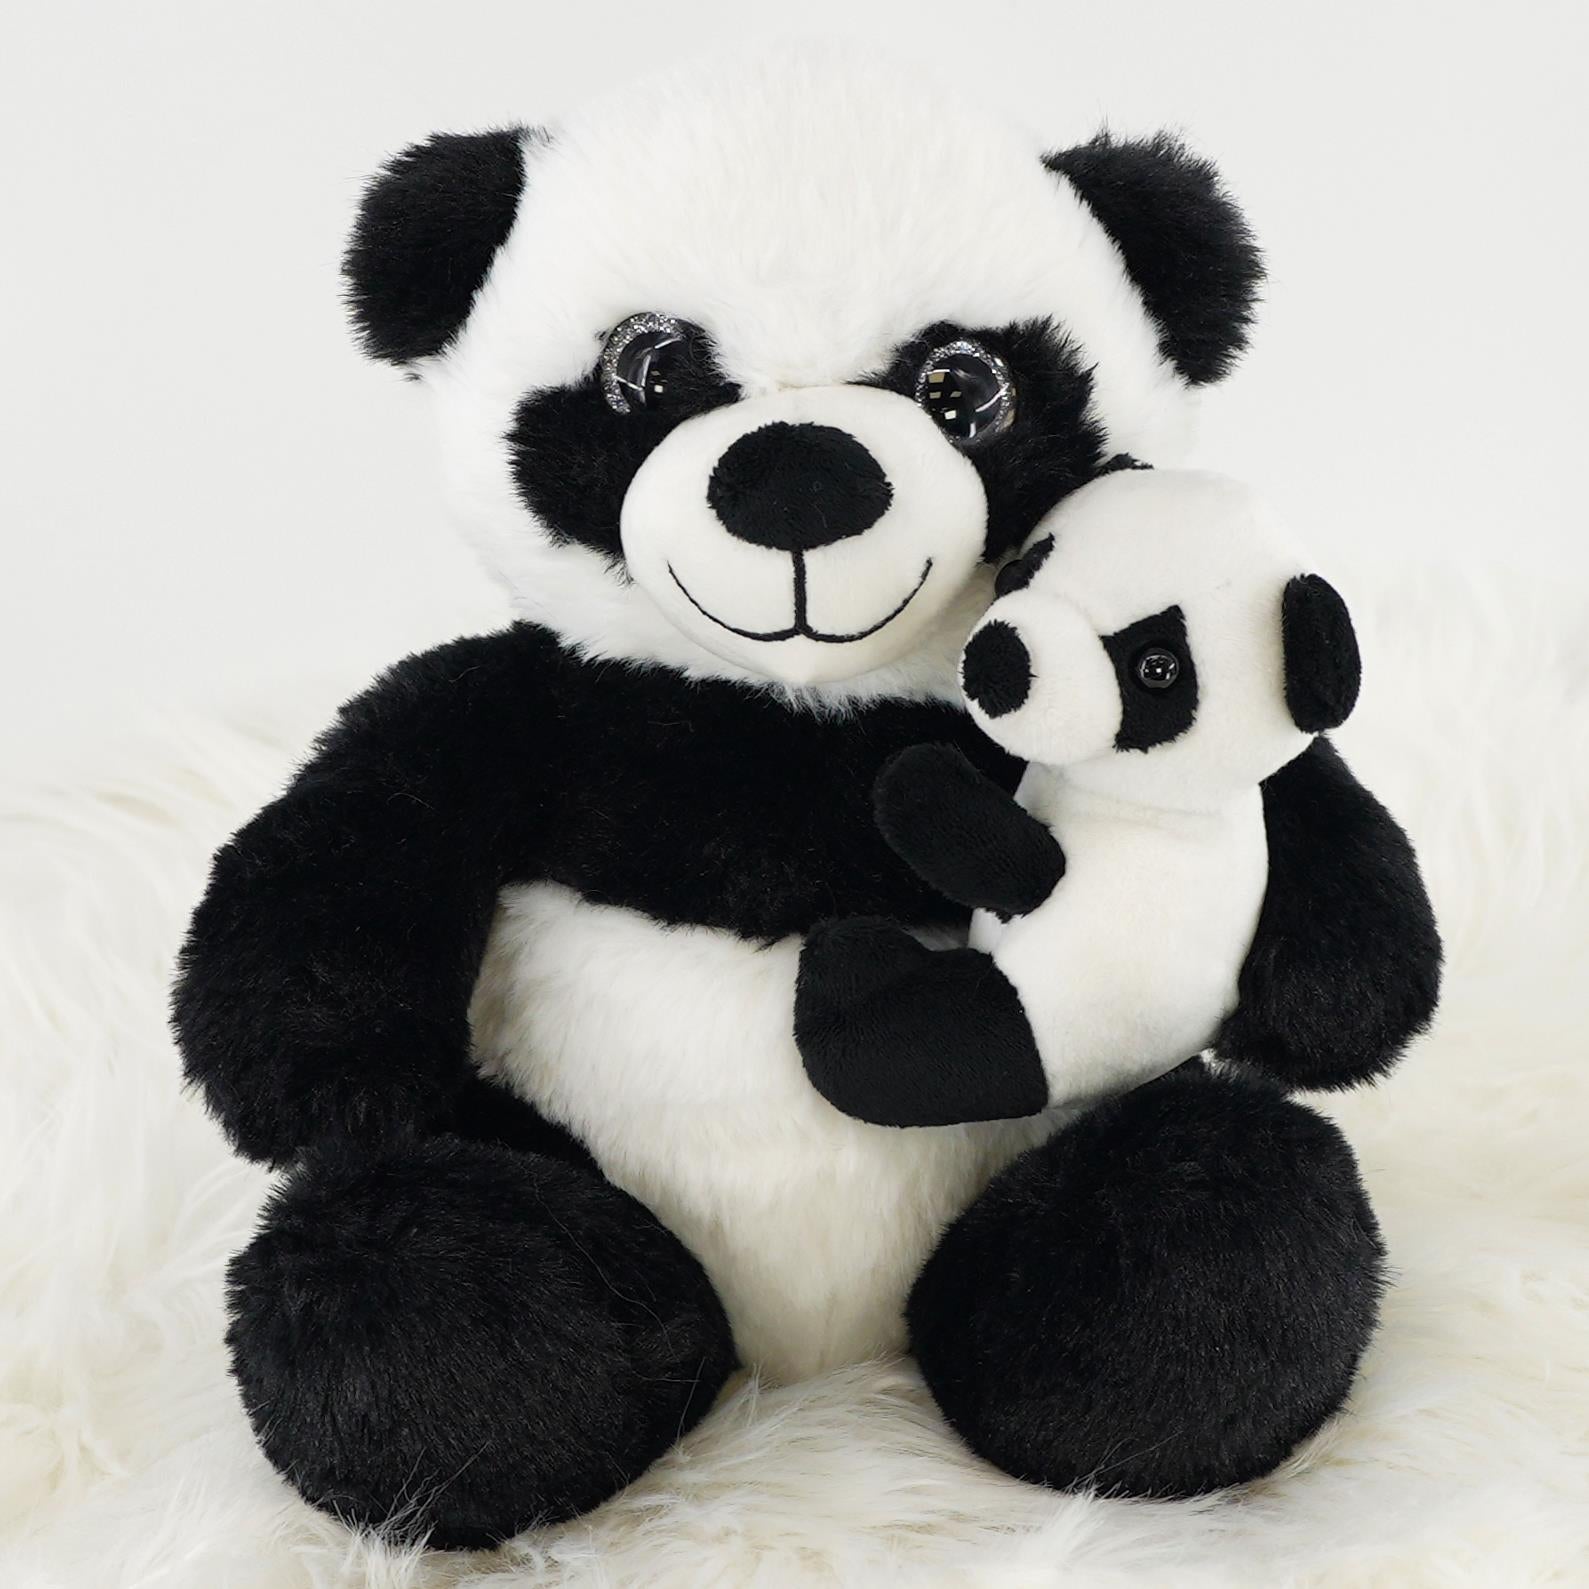 Plush Super Soft Panda Baby by The Magic Toy Shop - The Magic Toy Shop